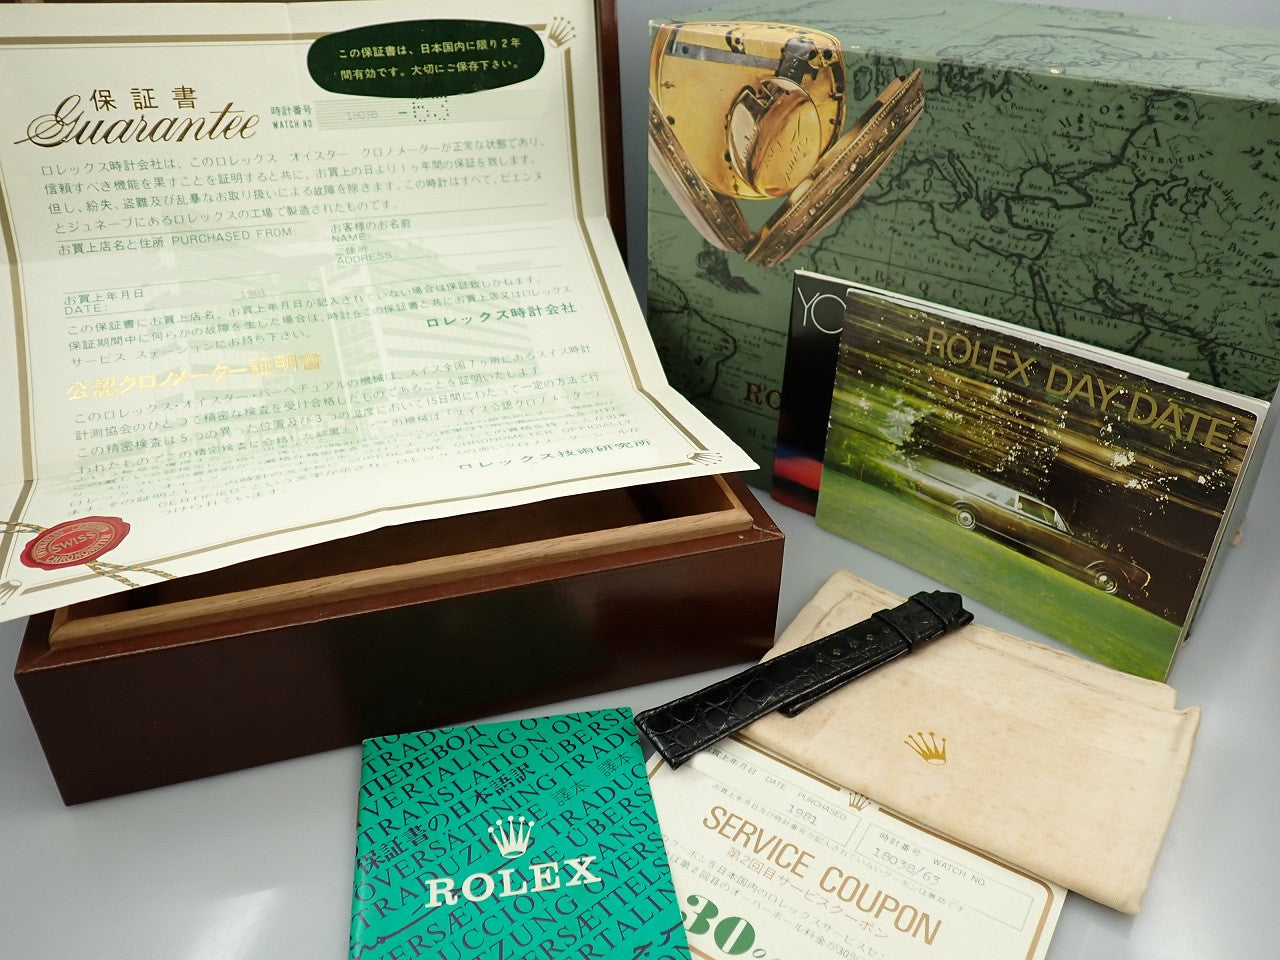 Rolex Day-Date 36 &lt;Warranty, Box, etc.&gt;